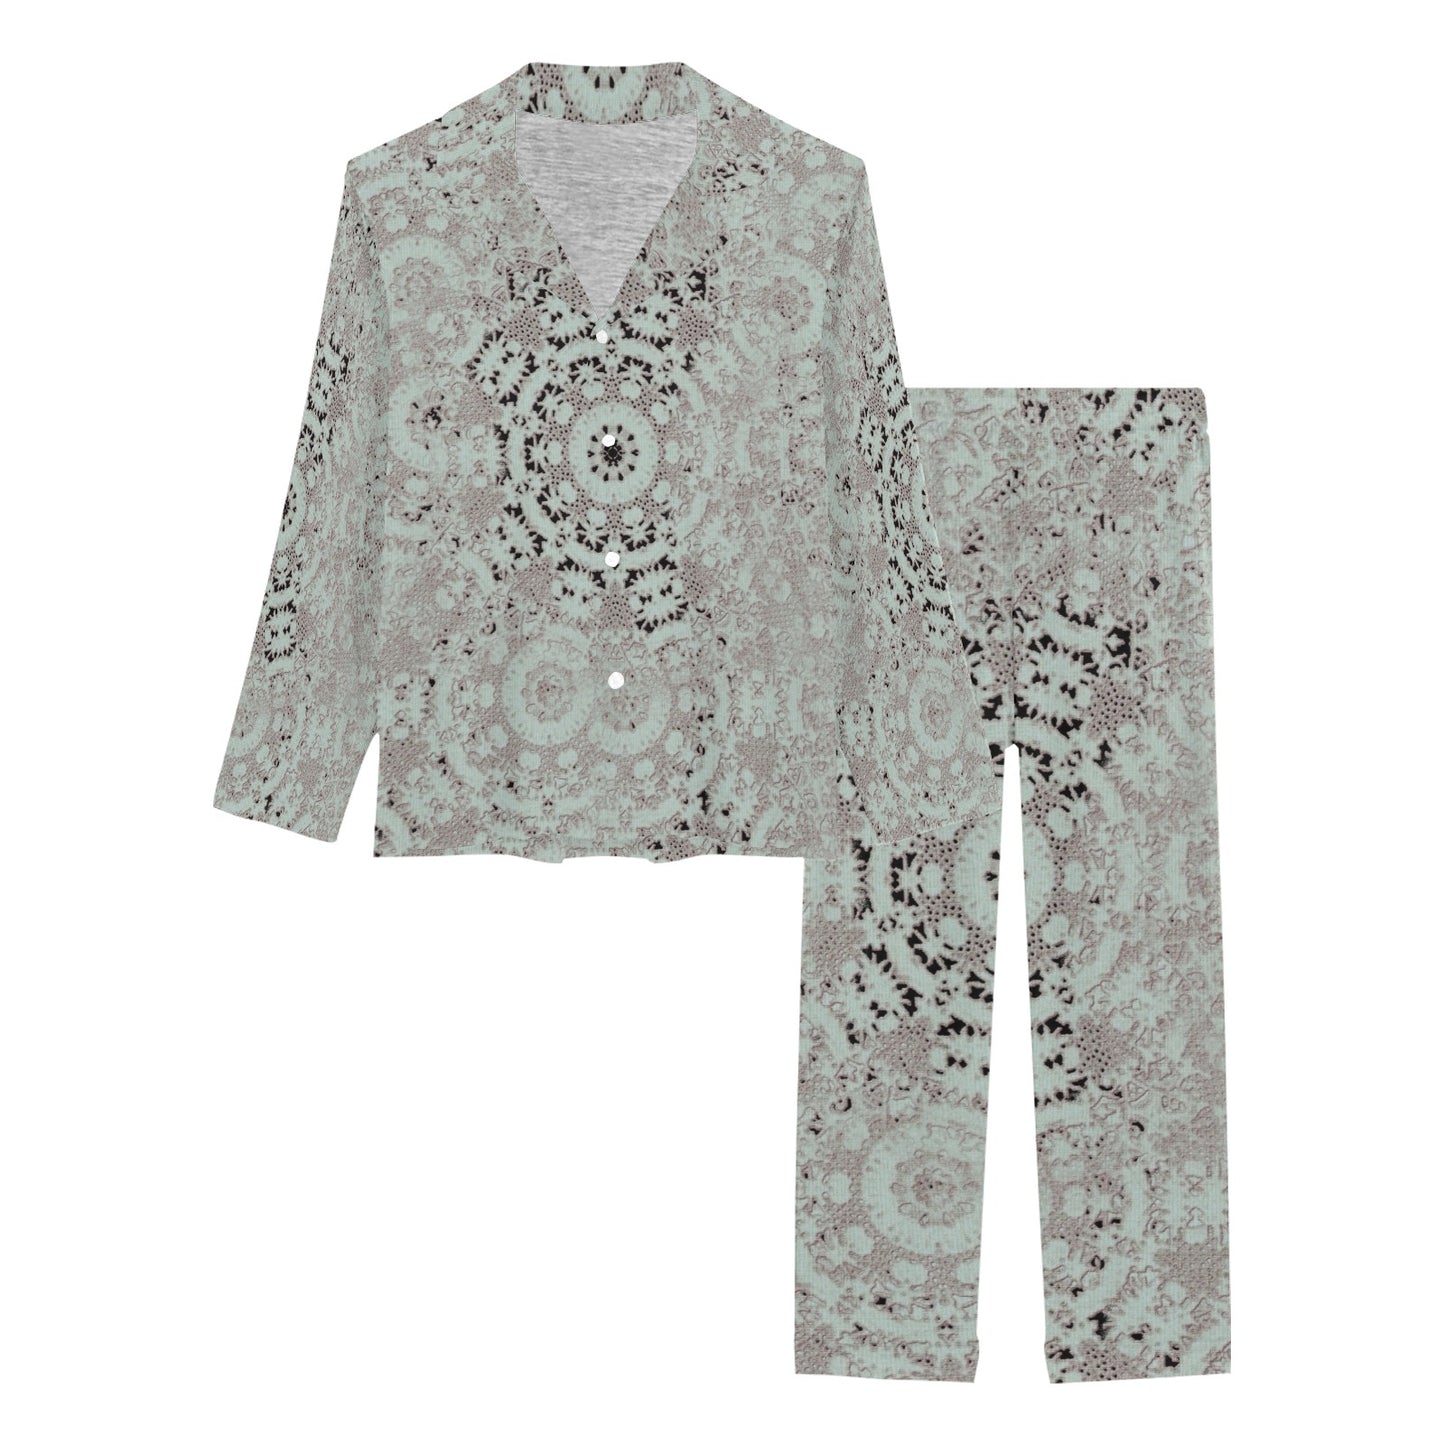 Victorian printed lace pajama set, design 51 Women's Long Pajama Set (Sets 02)